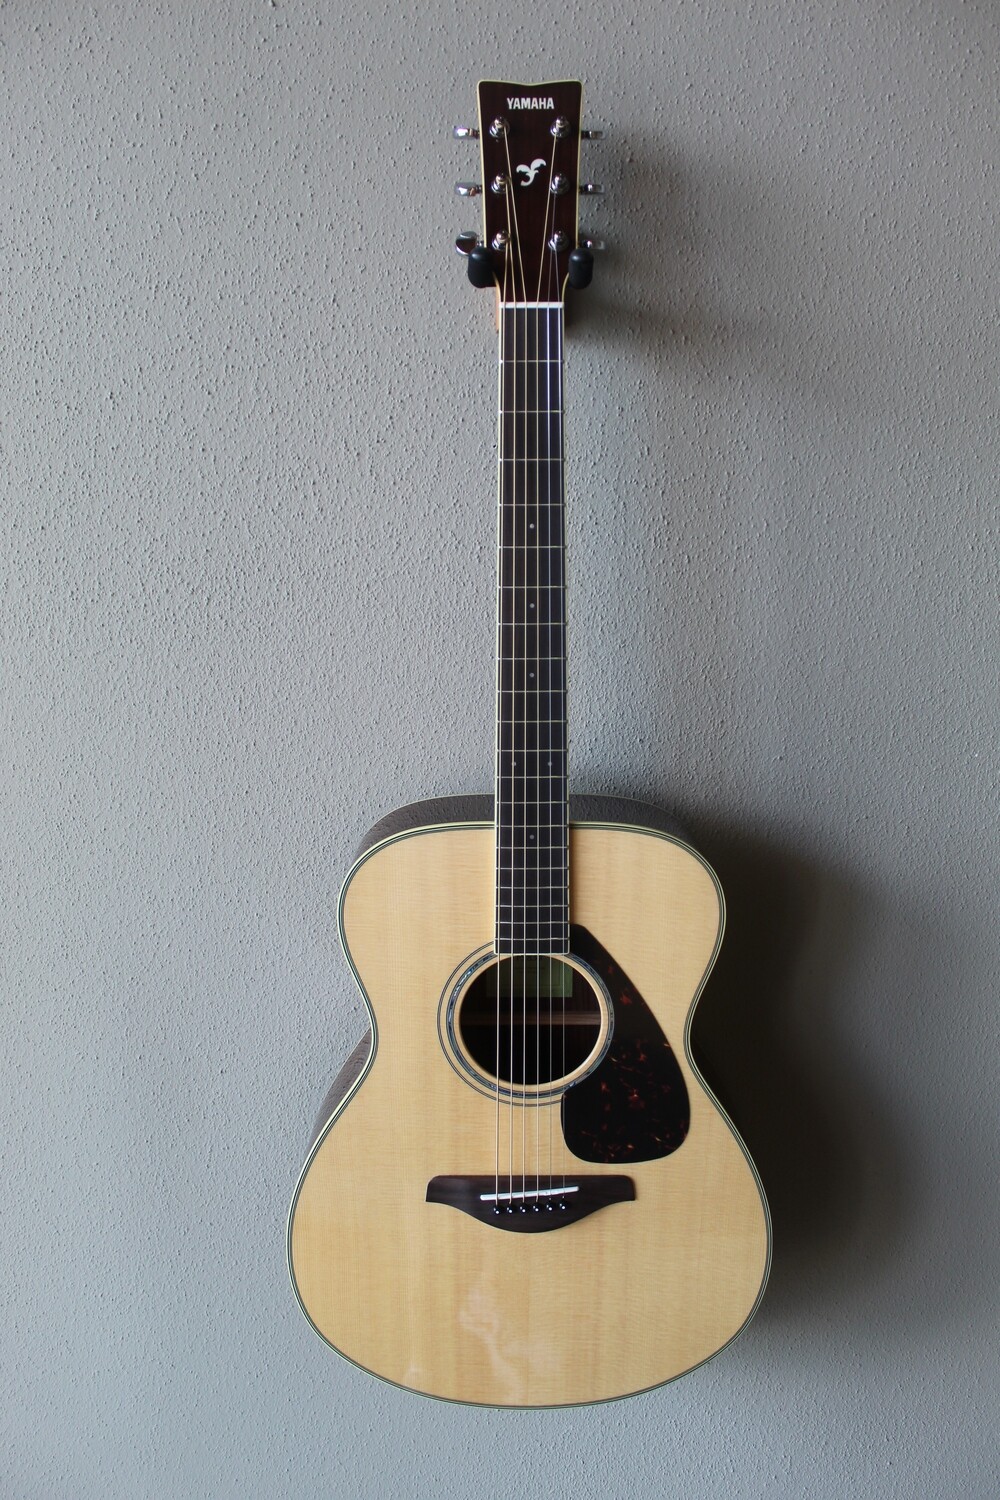 Yamaha FS830 Concert Steel String Acoustic Guitar with Gig Bag - Natural